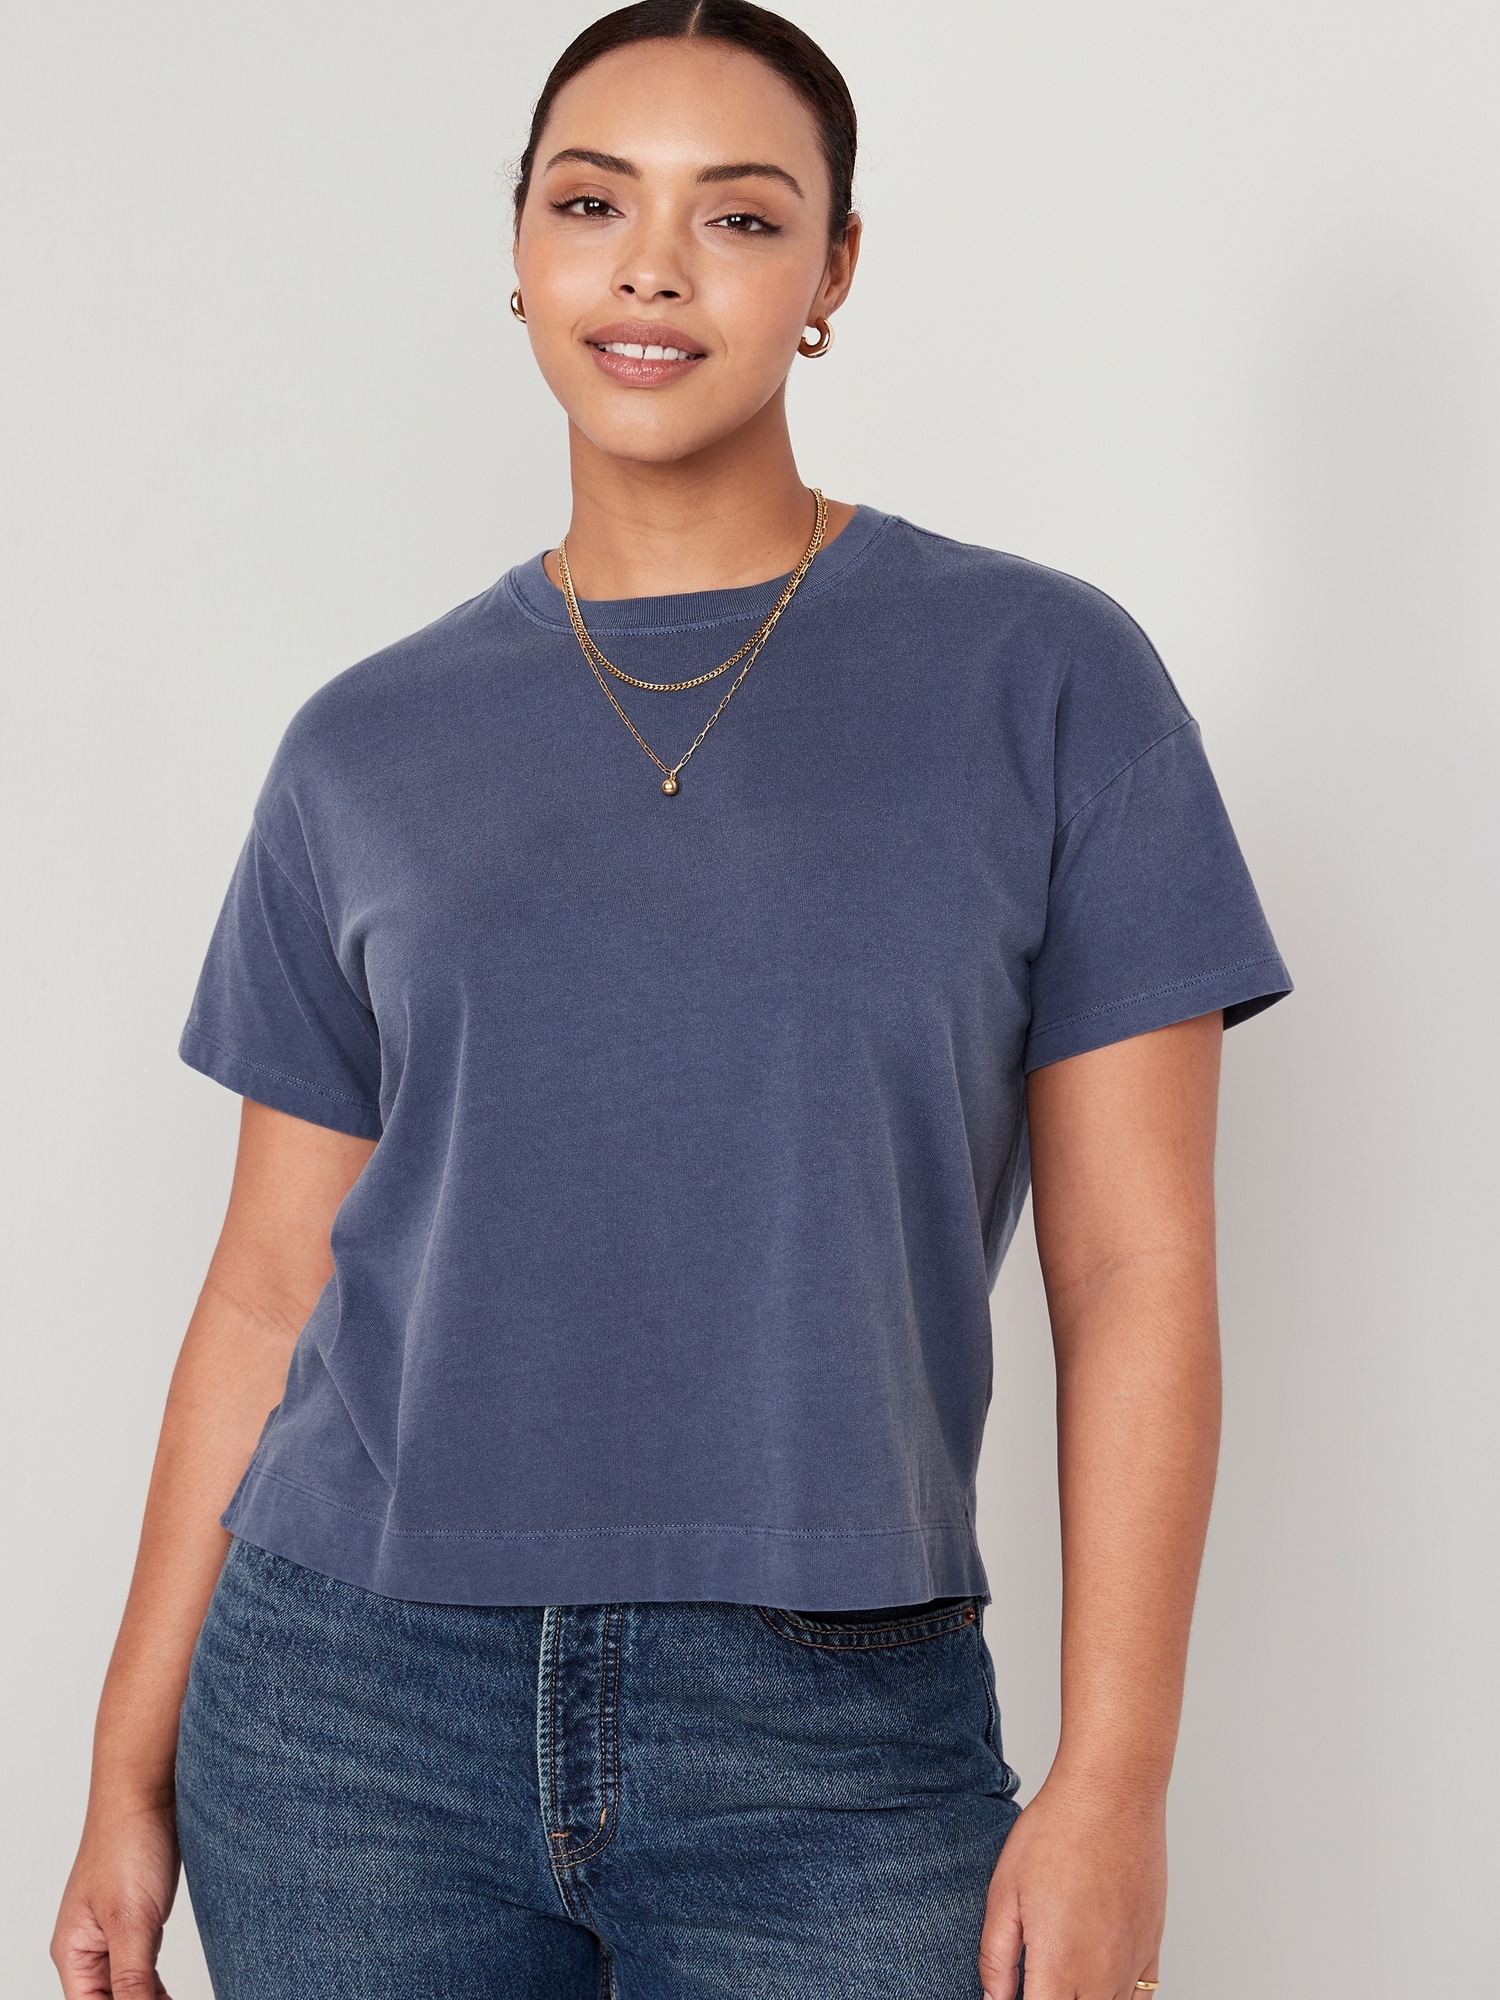 Vintage Women's T-Shirt - Navy - M